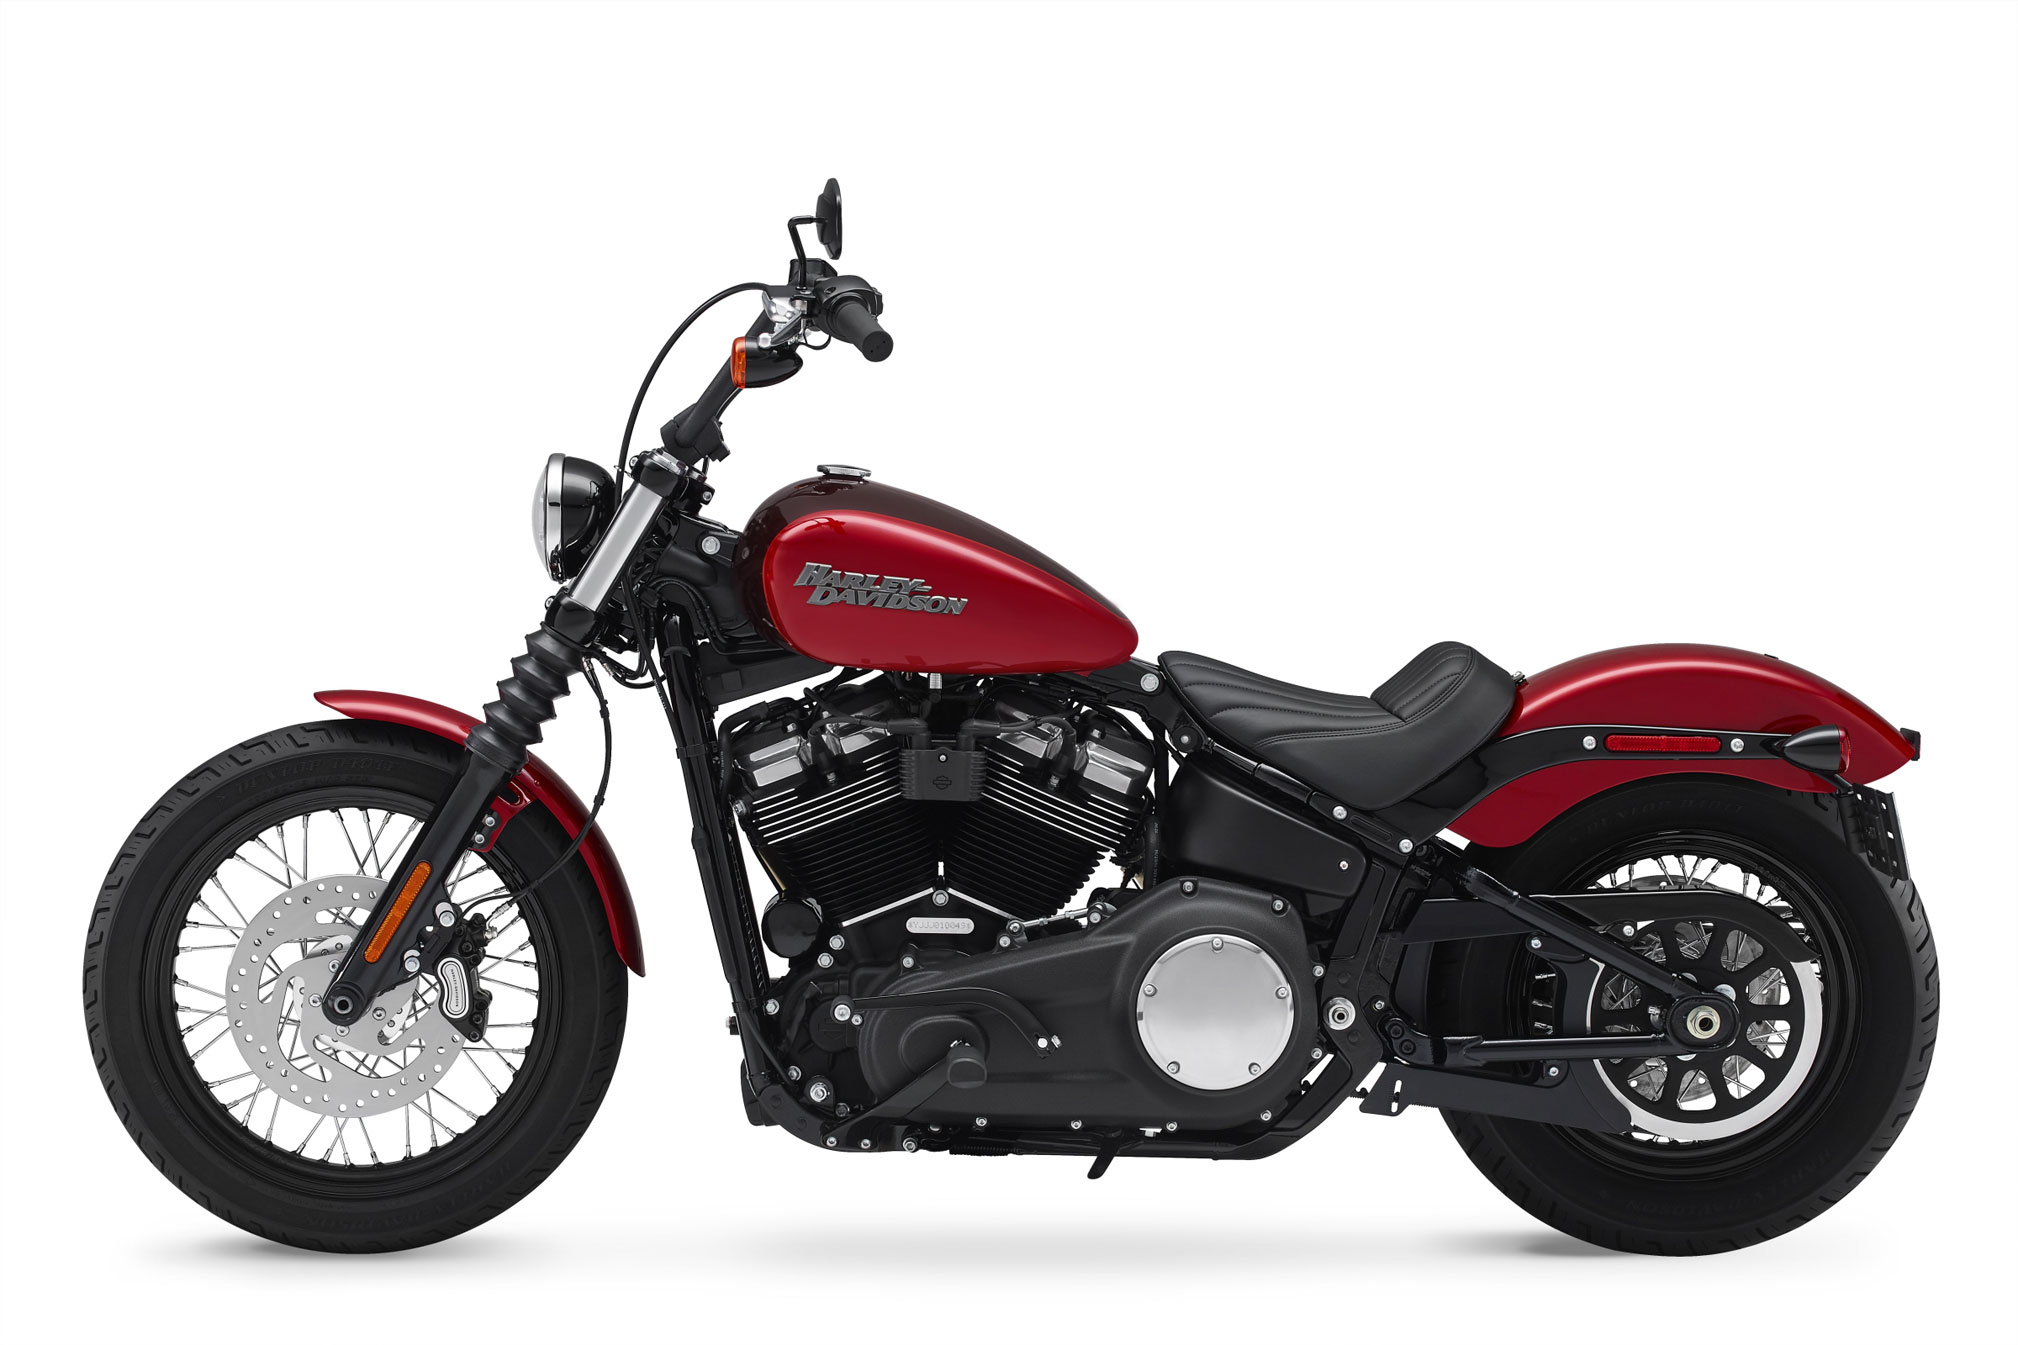 Used 2013 Harley Davidson Dyna Street Bob Motorcycles In Big Bend Wi 4334 Vivid Black